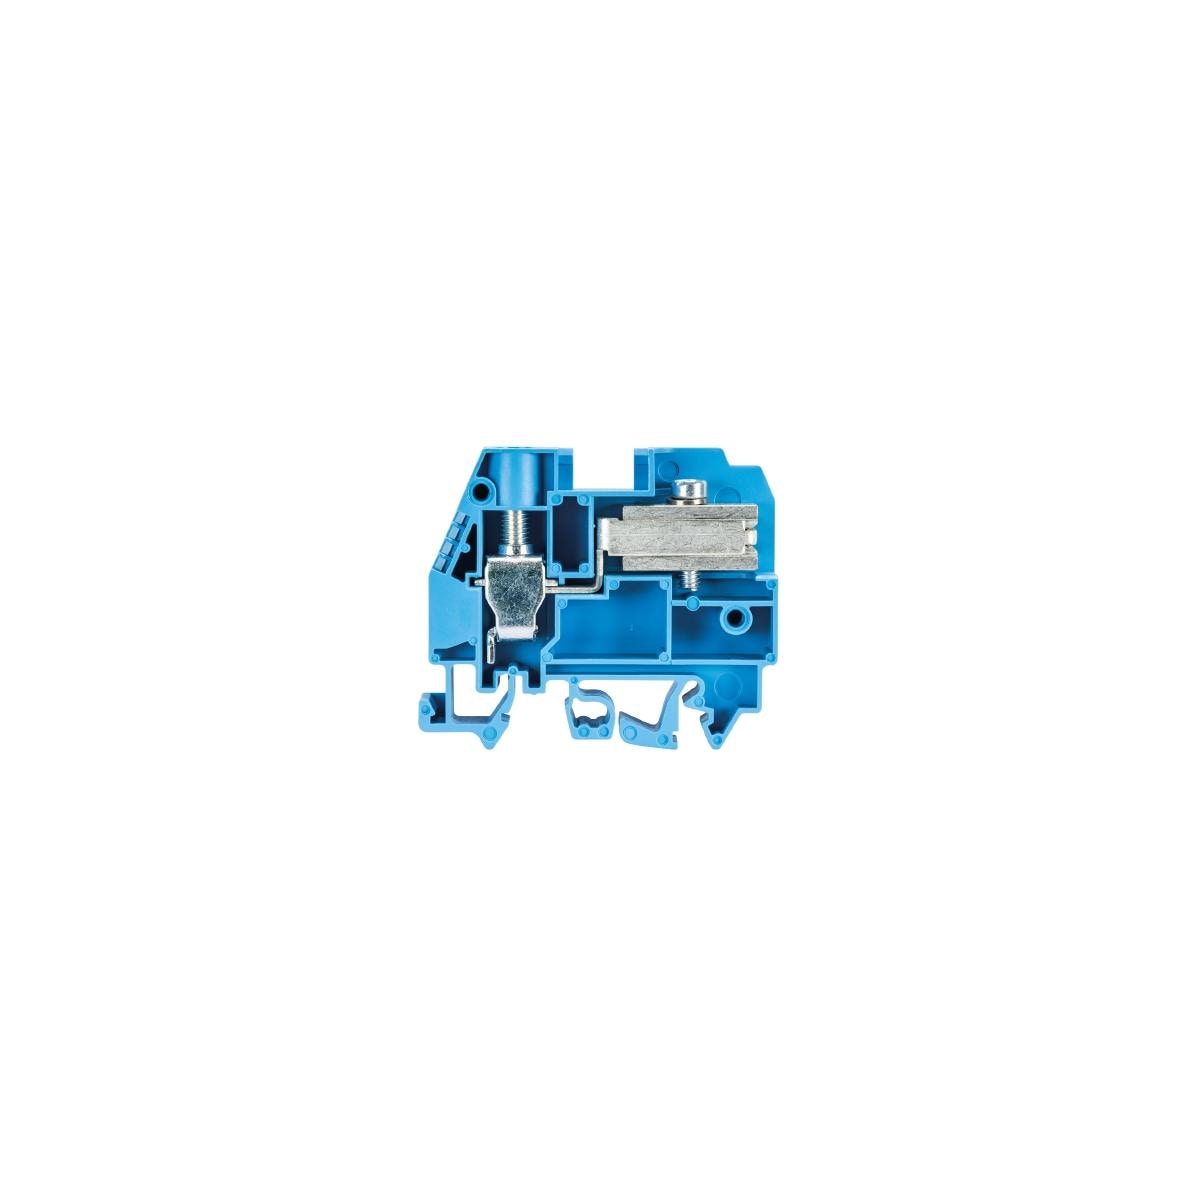 Wieland Electric NEUTRALLEITER-TRENNKLEMME WKI 10 ETK/U/V0, blau  (57.510.8255.0) Elektroshop Wagner